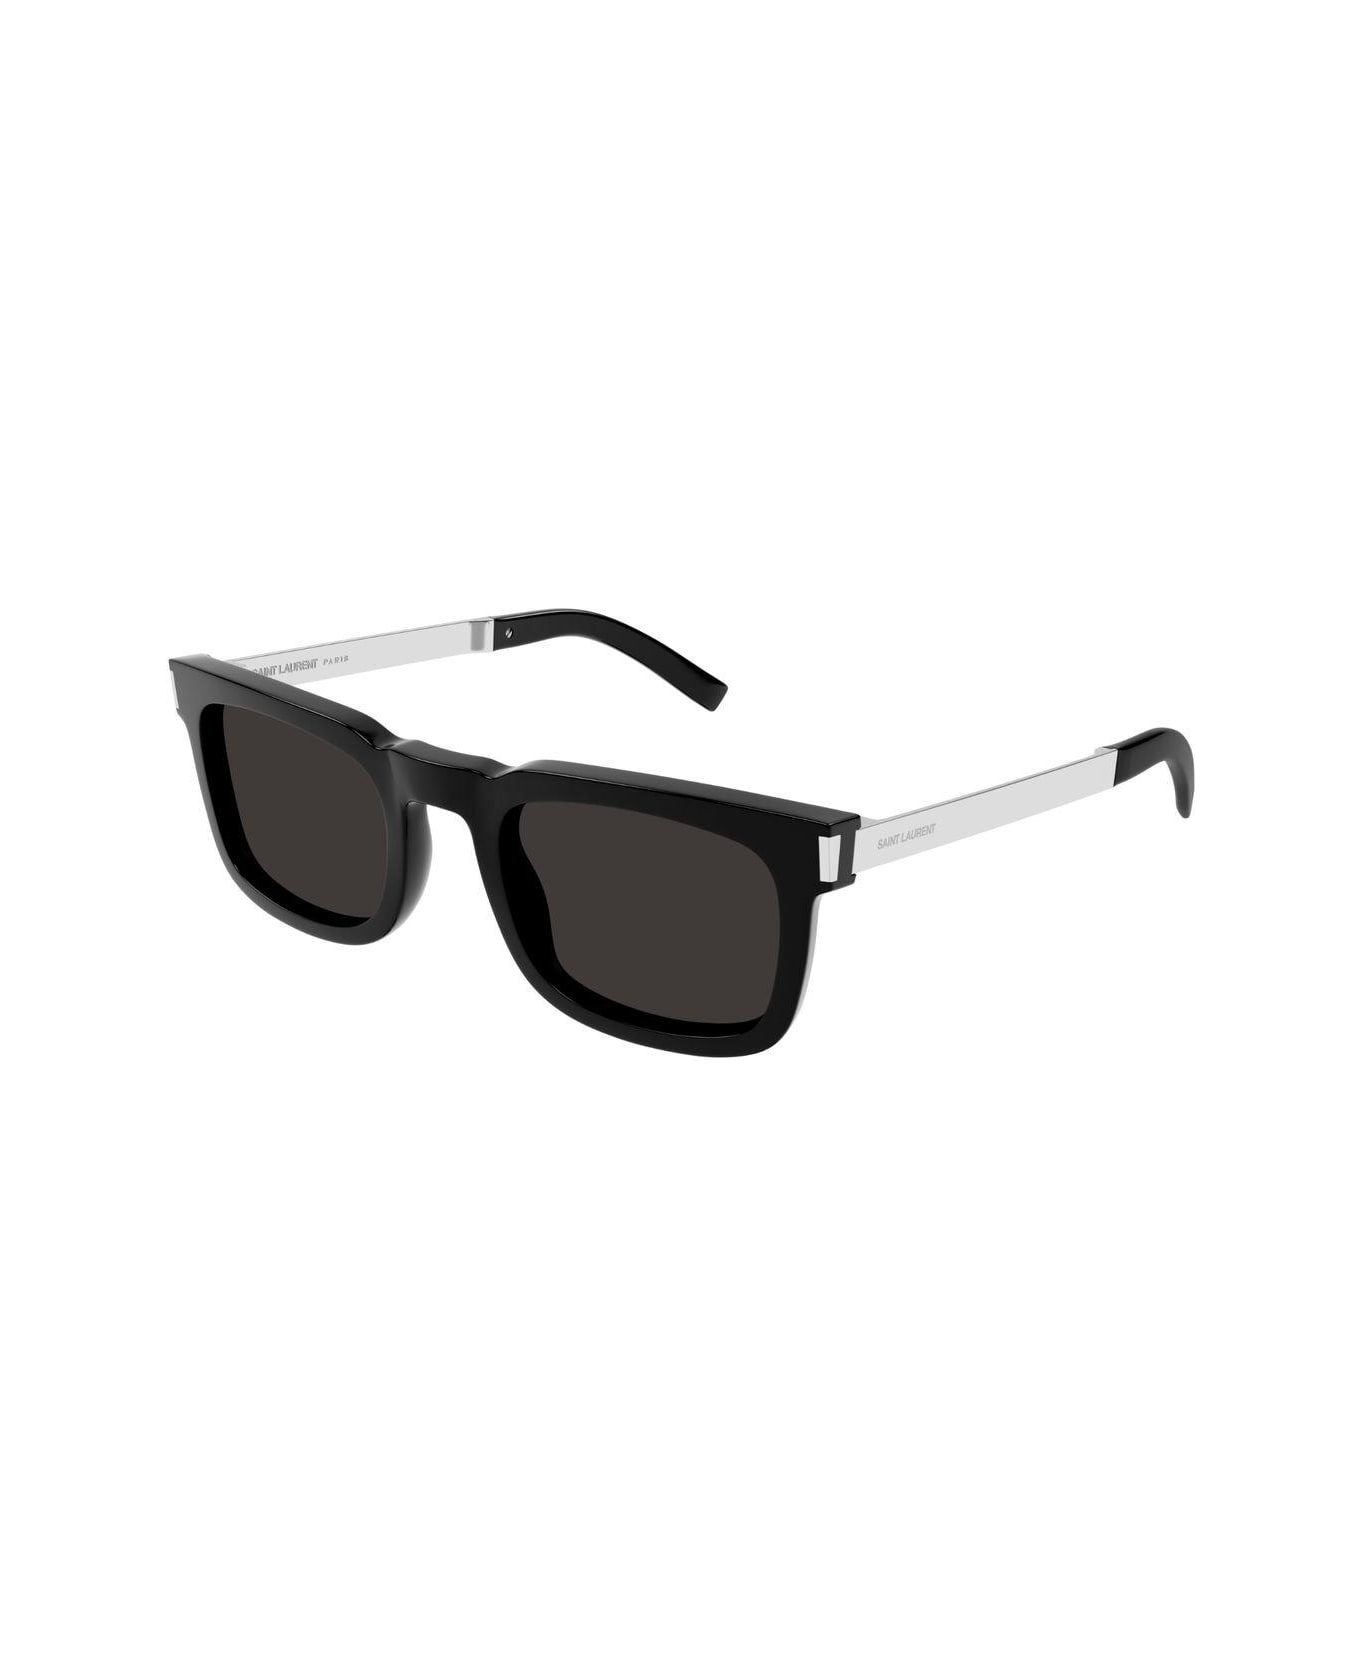 Saint Laurent Eyewear Square Frame Sunglasses Sunglasses - 001 BLACK SILVER BLACK